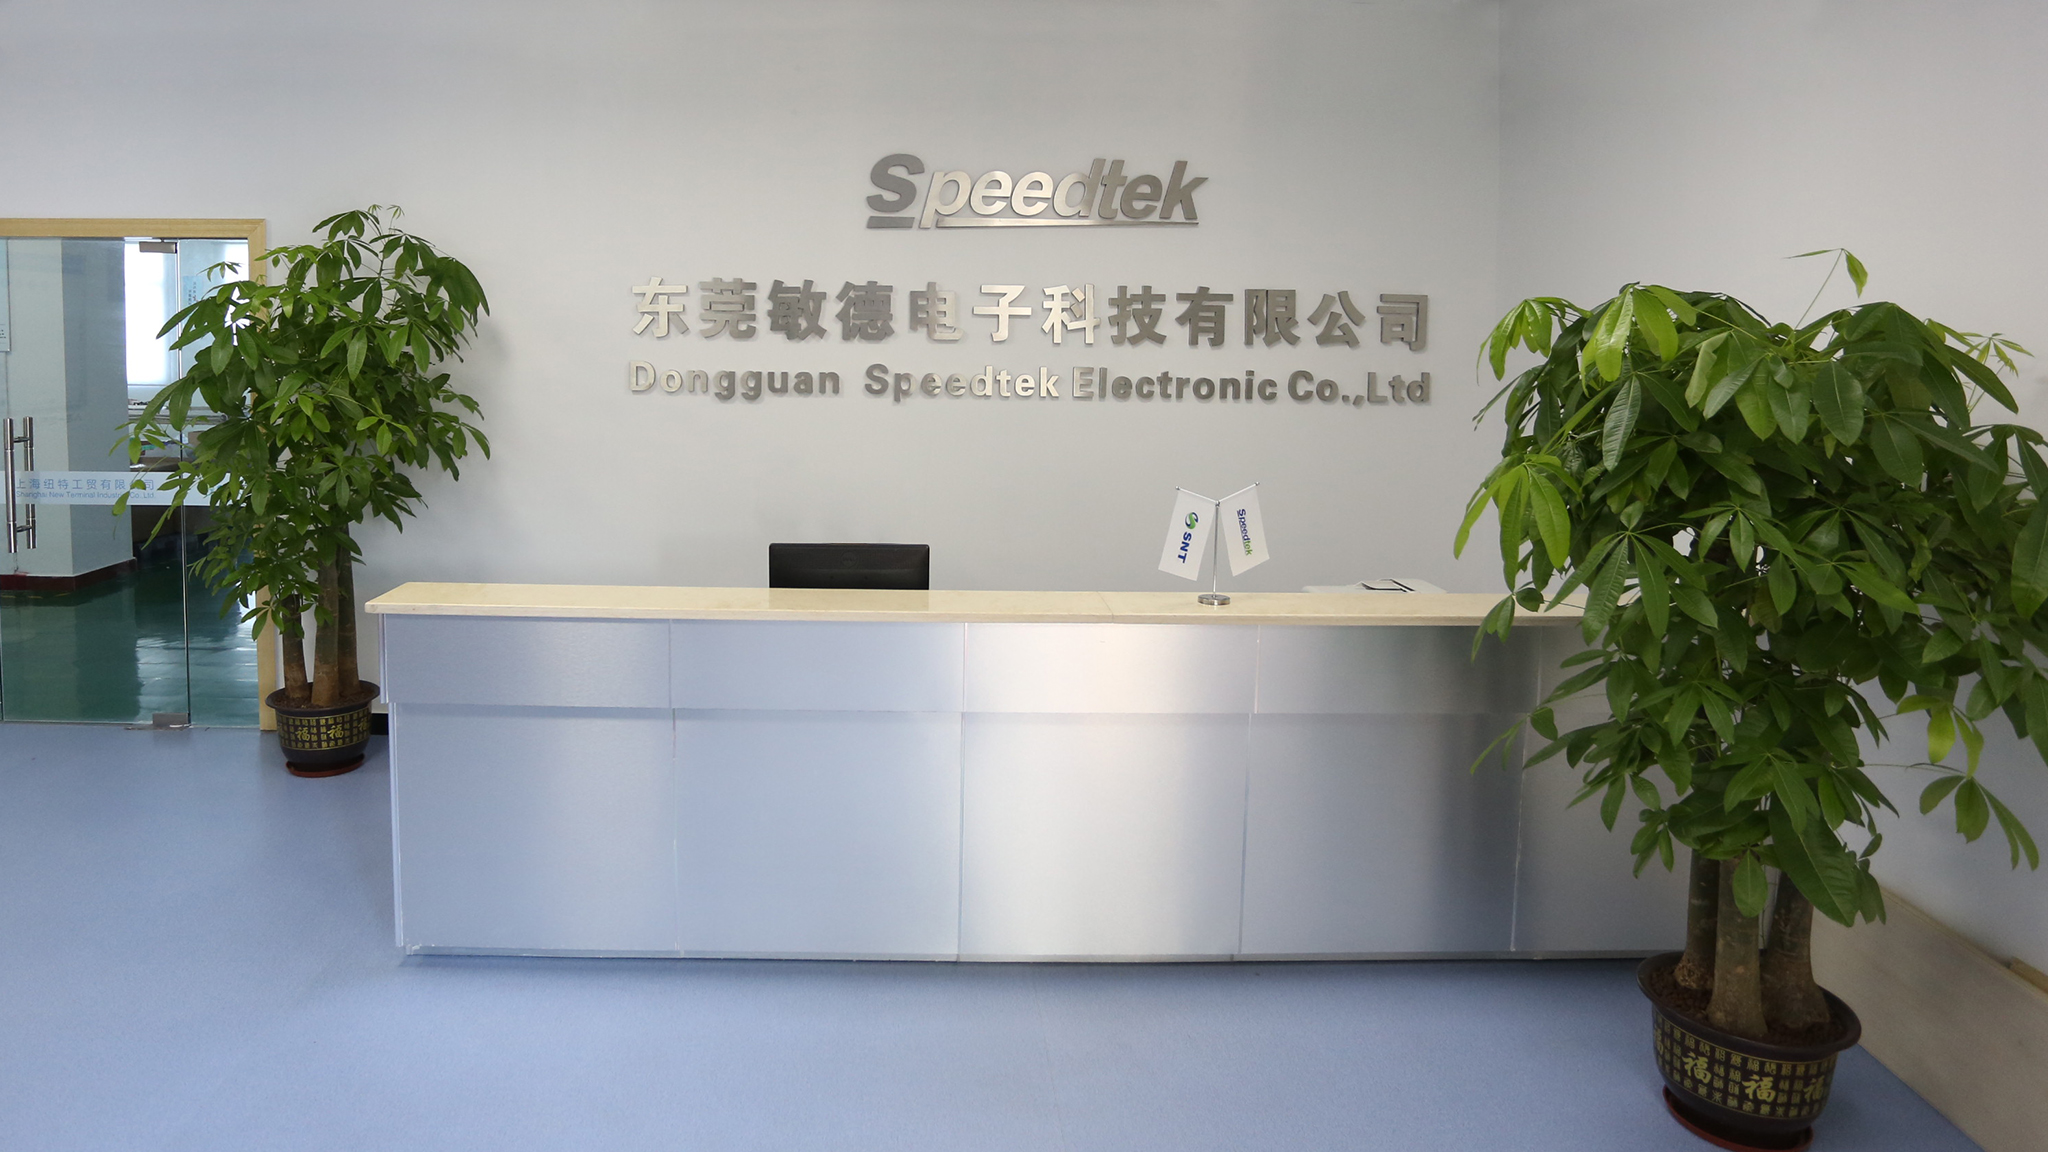 Dongguan Speedtek Electronic Co., Ltd.